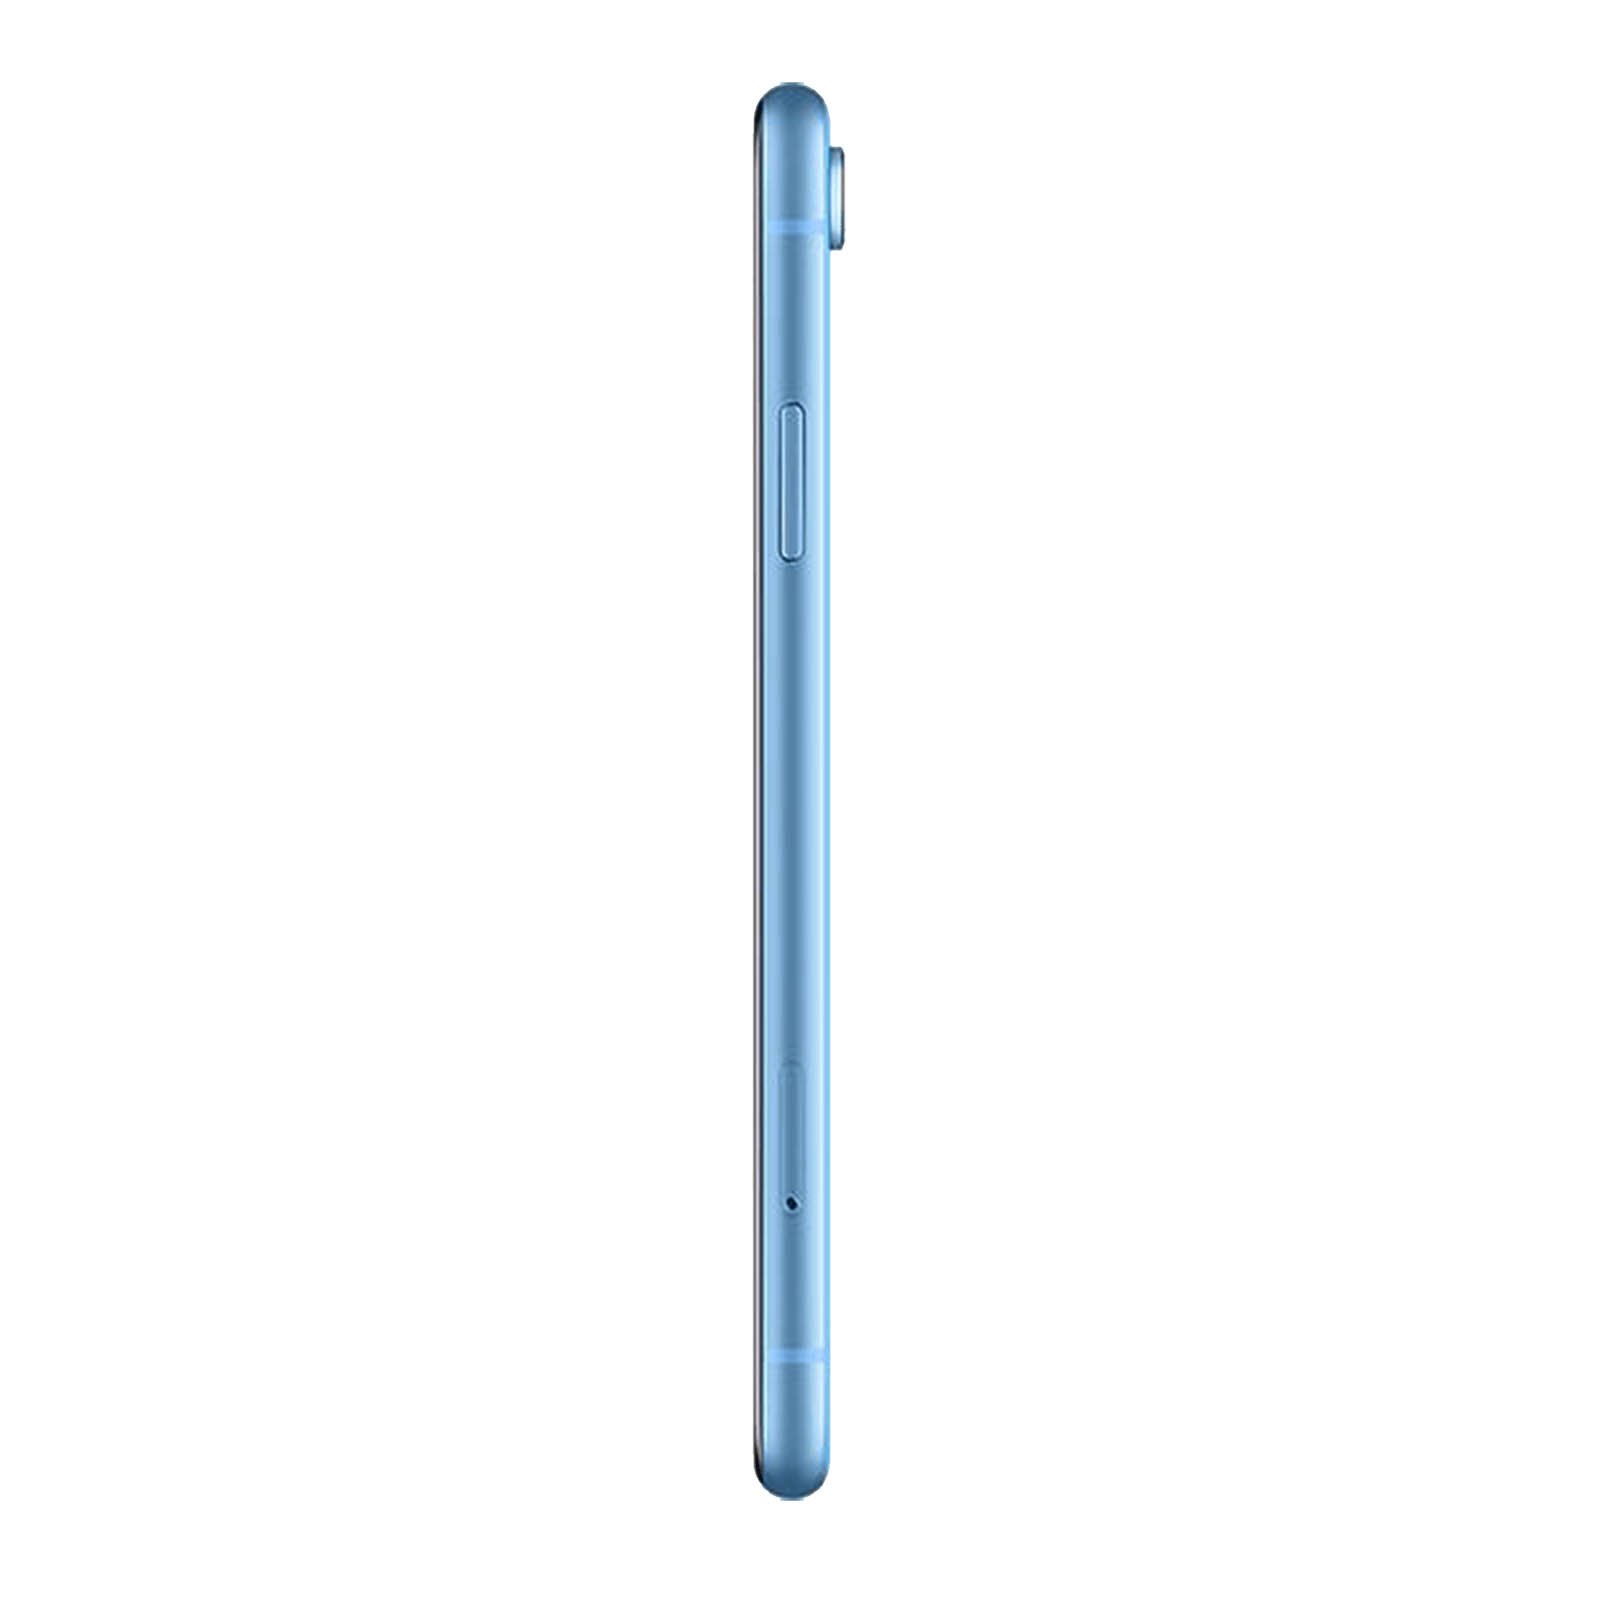 Apple iPhone XR 256GB Blue Very Good - Unlocked